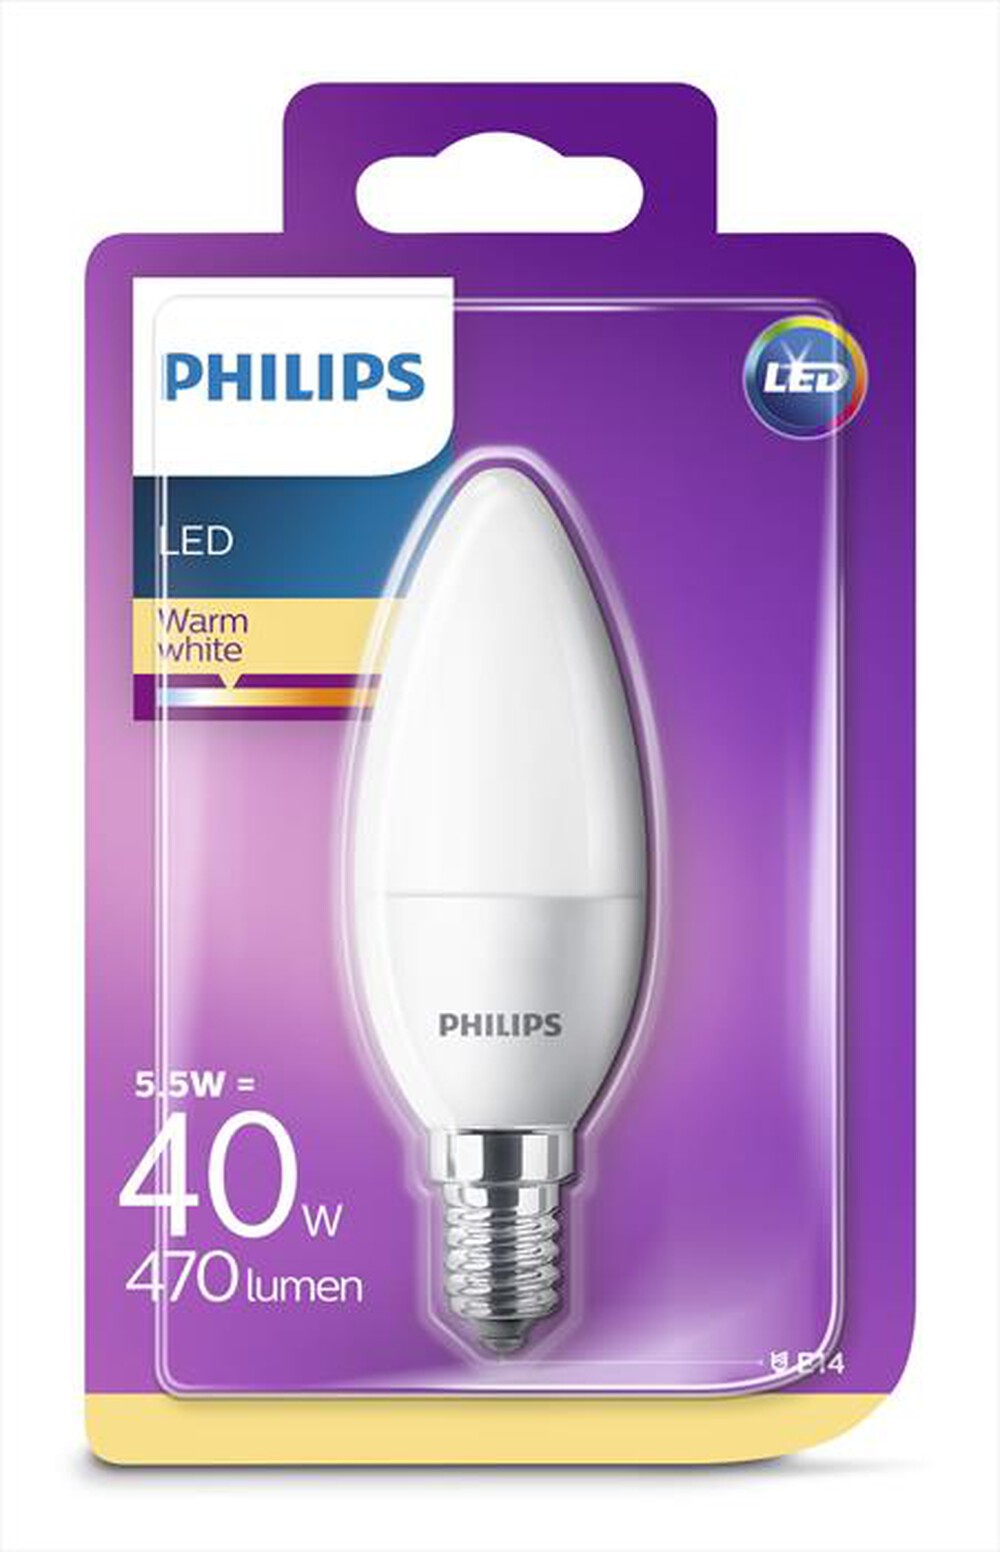 "PHILIPS - LEDOL40SM 5,5W E14 - Luce bianca calda"